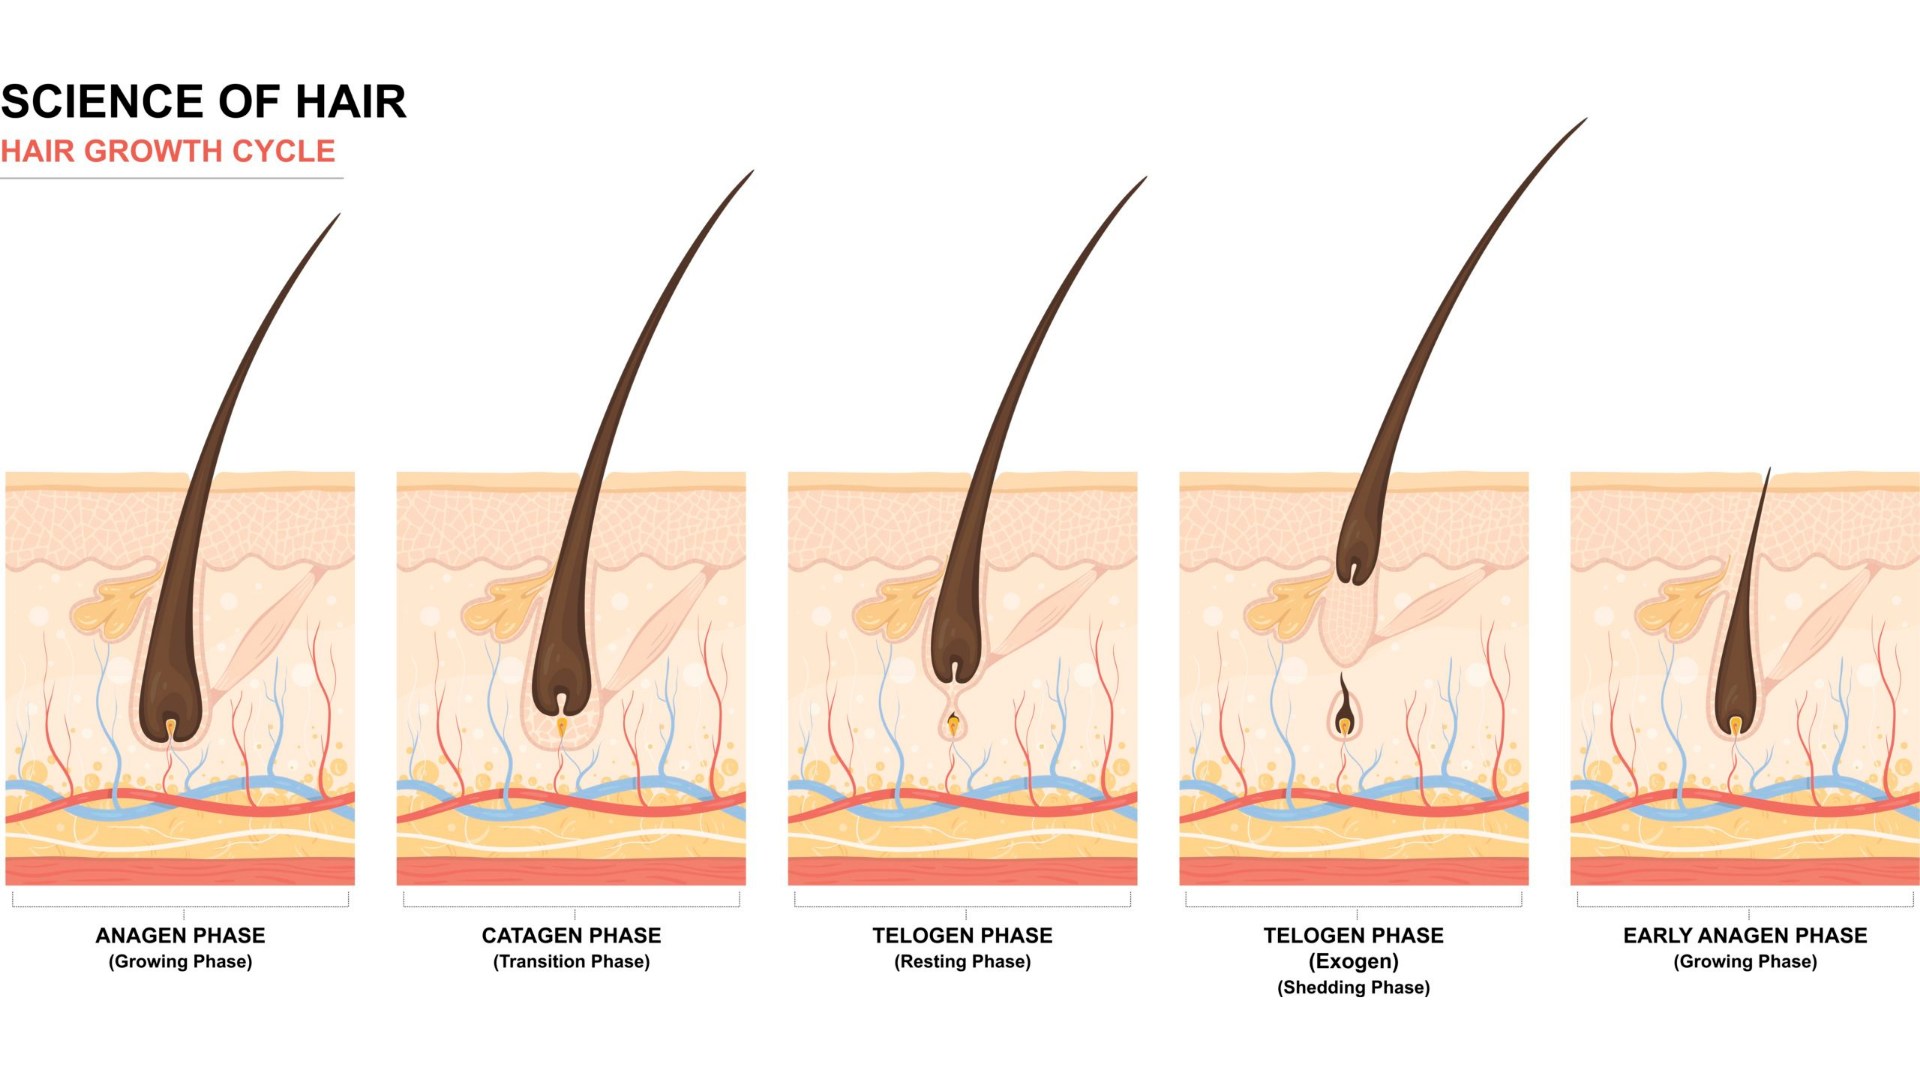 Hair follicle growth cycle